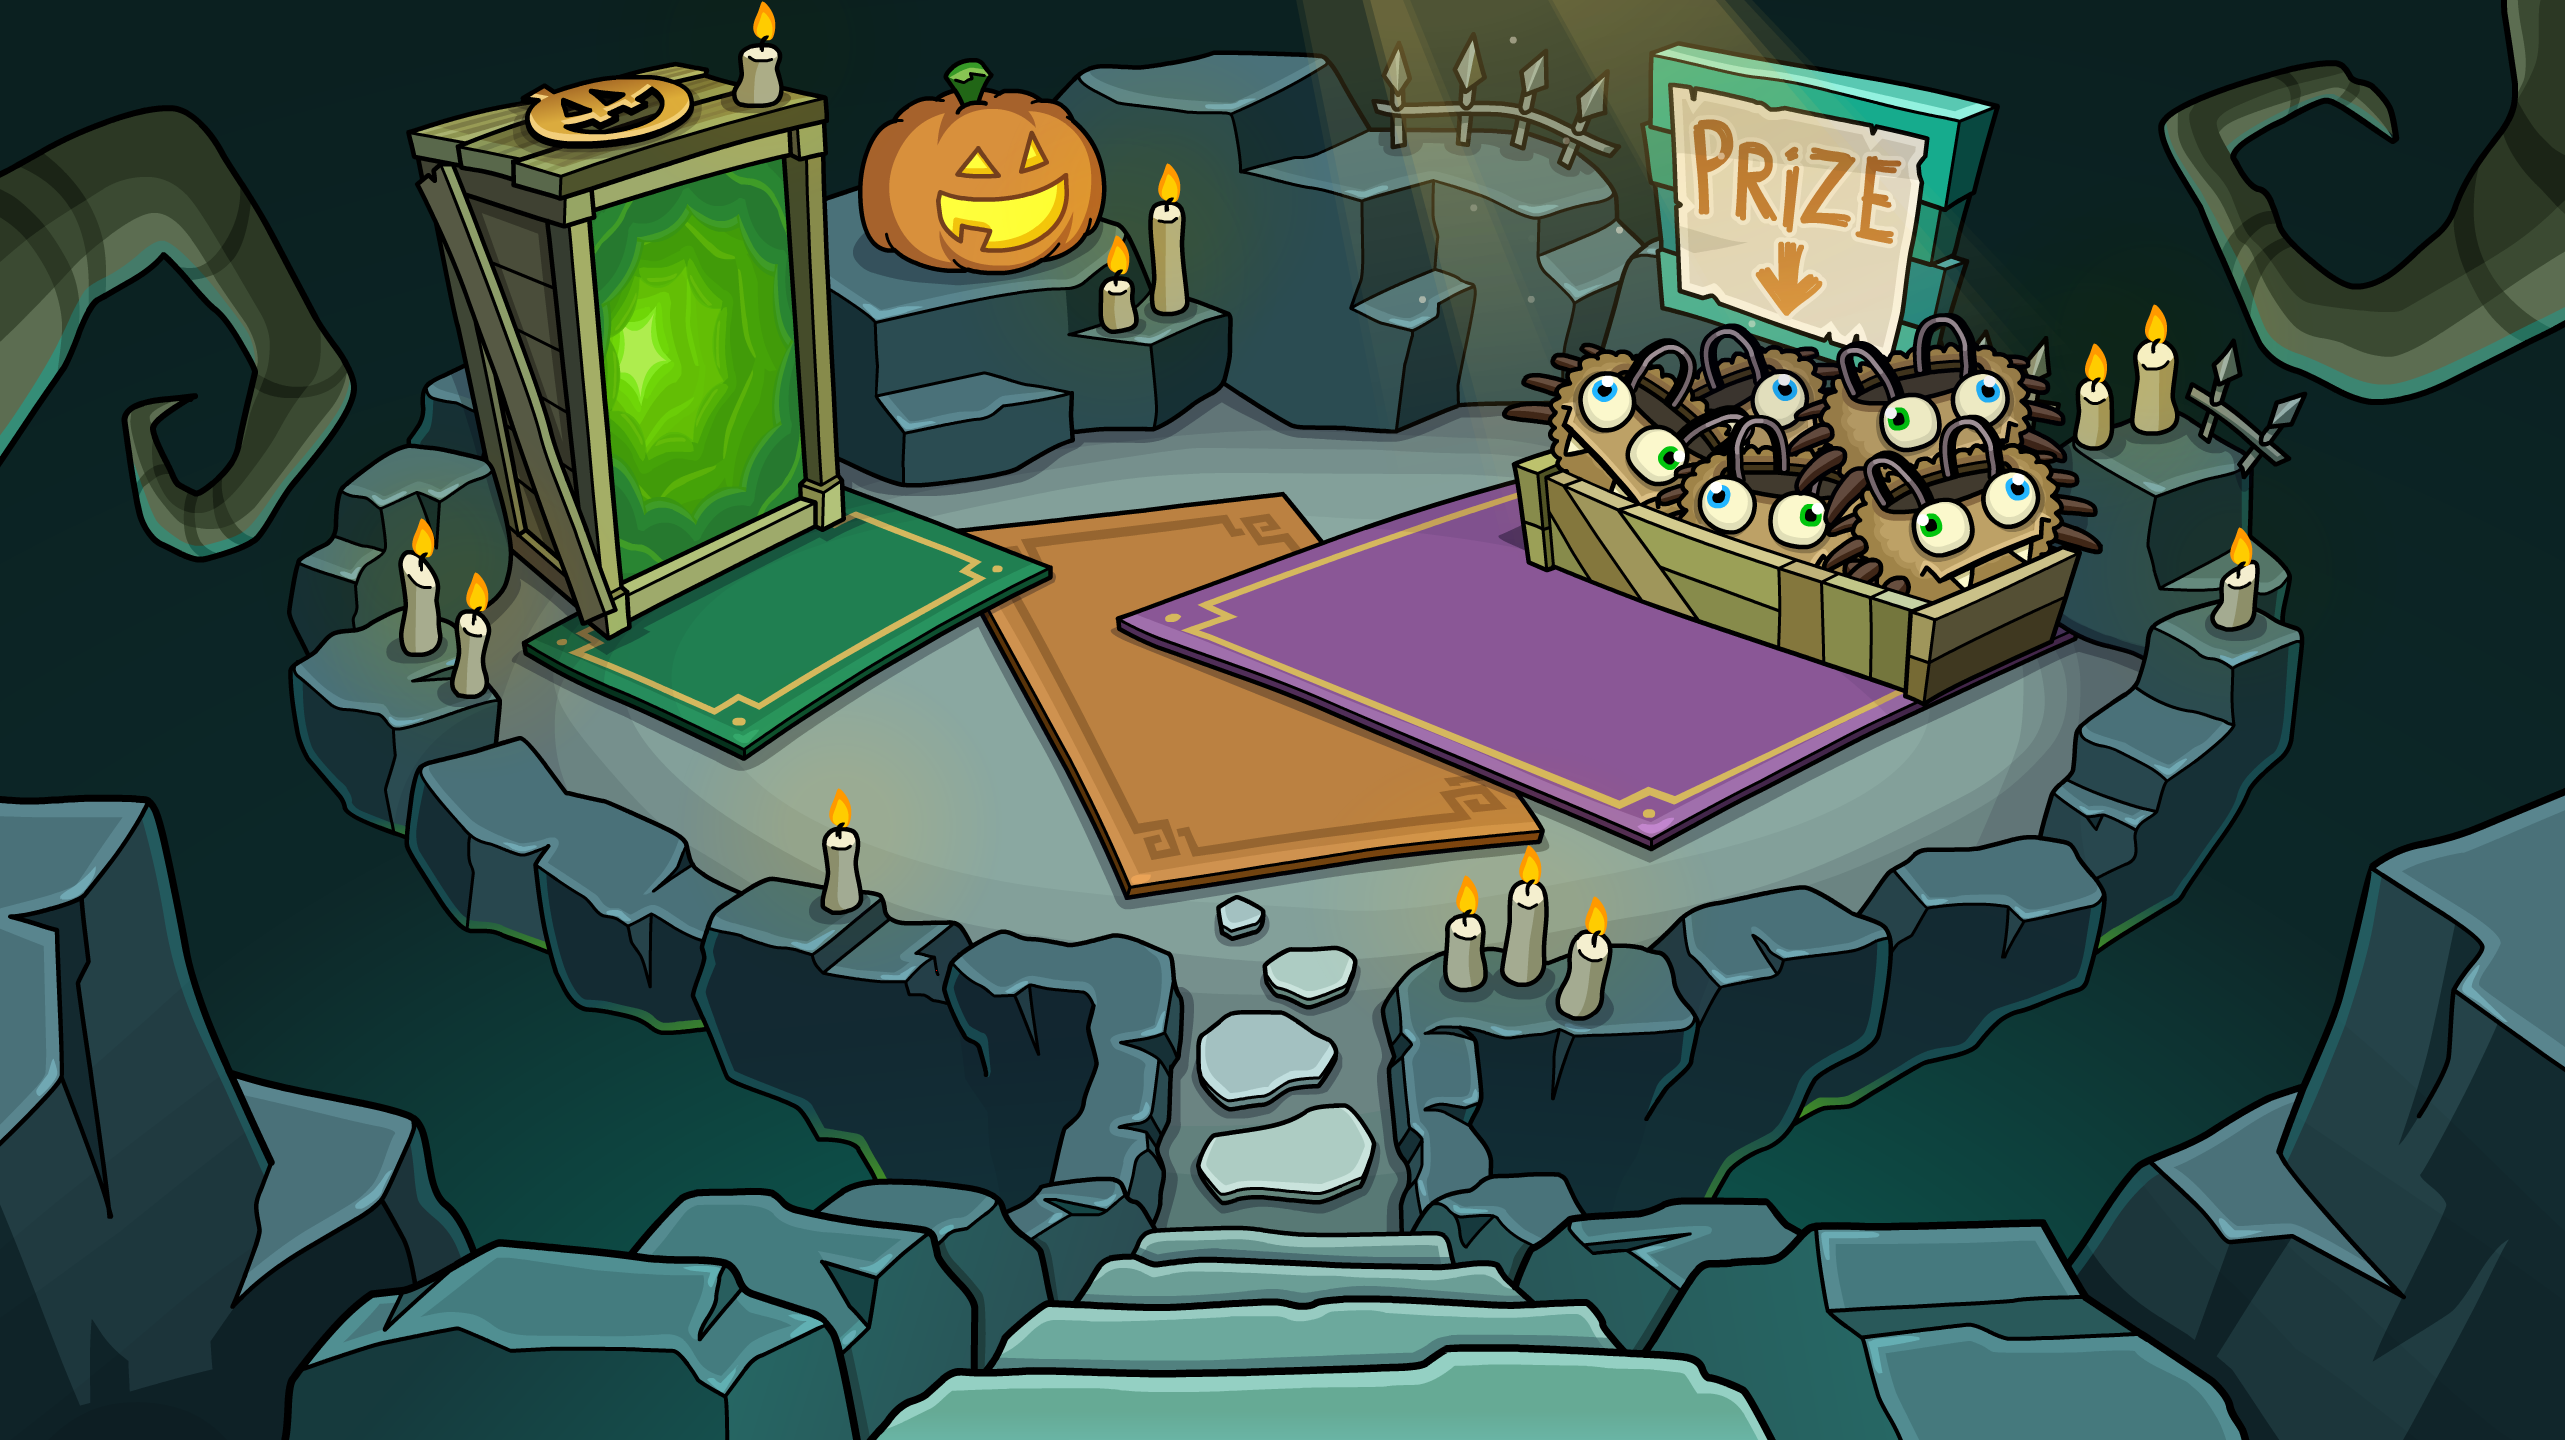 Labirinto Halloween